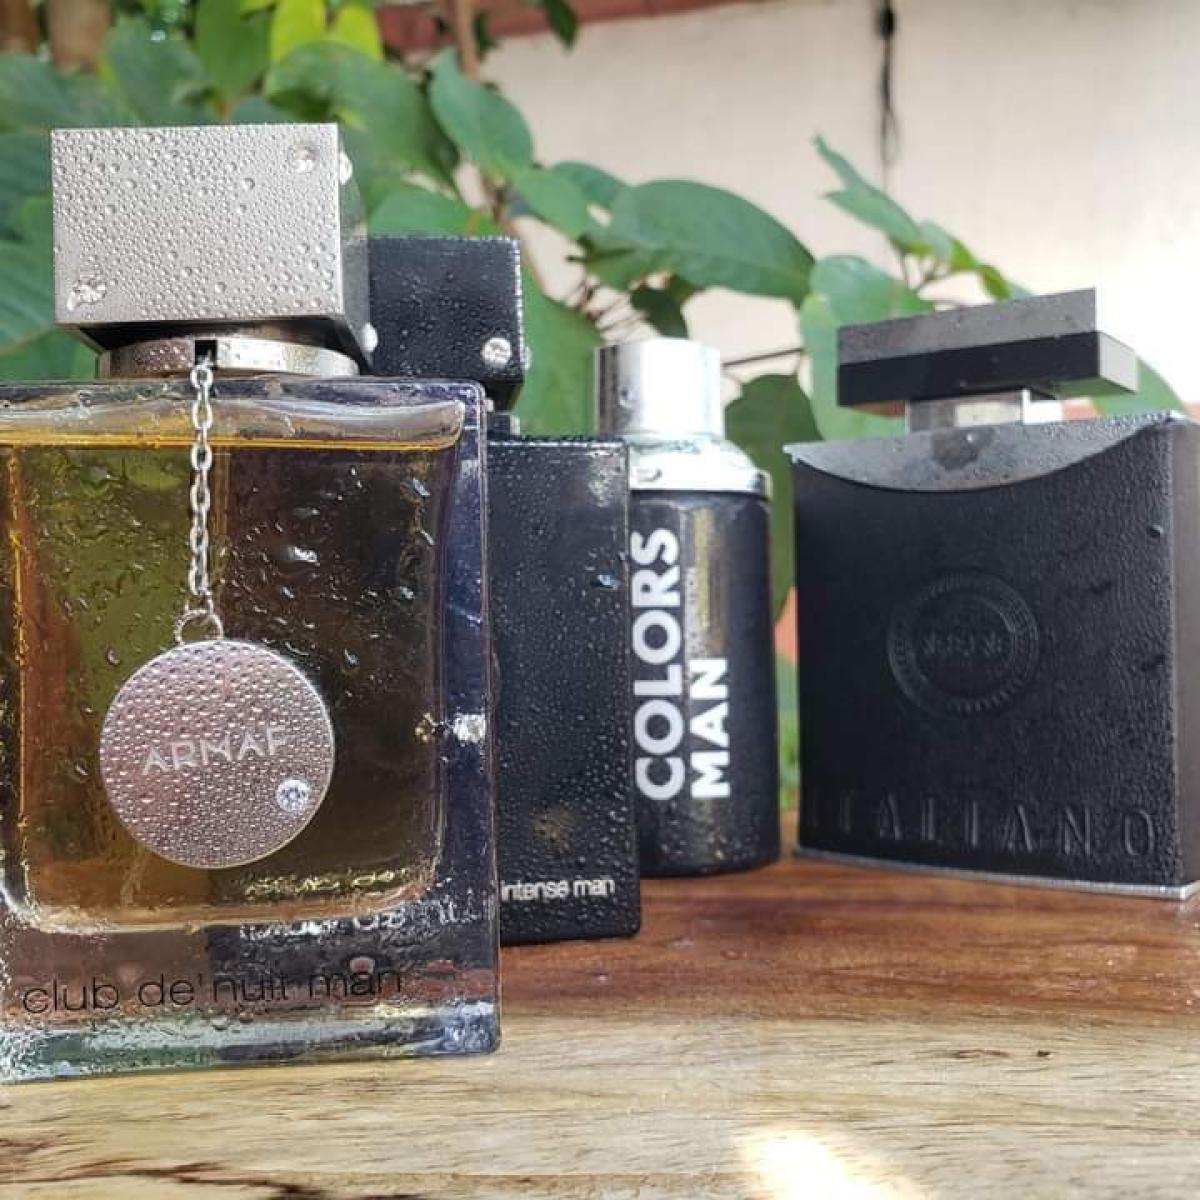 Italiano Nero Armaf cologne - a fragrance for men